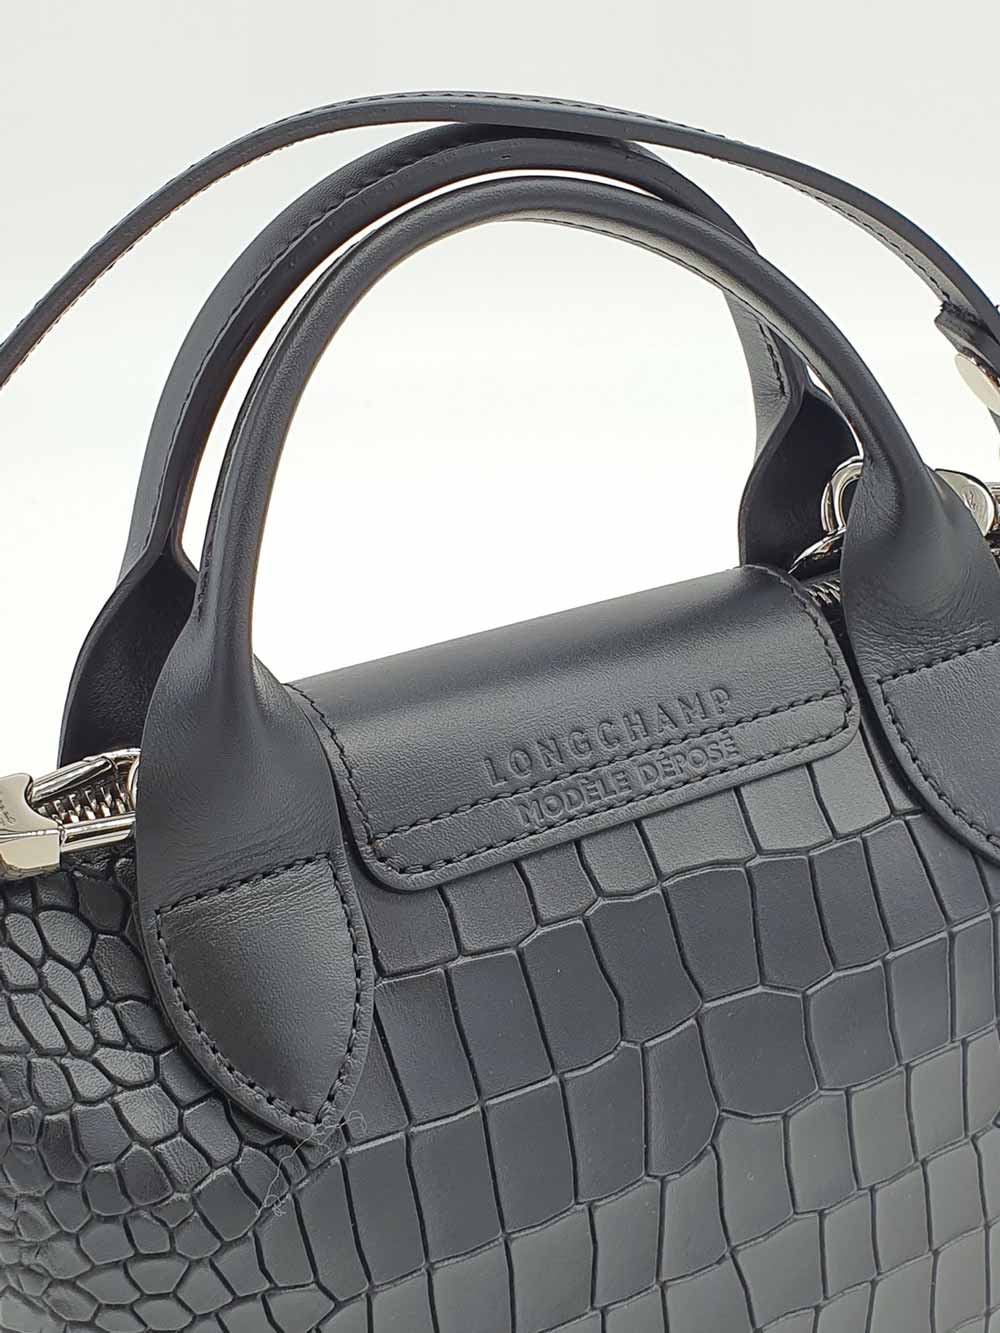 Longchamp Mini Le Pliage Cuir Croc Embossed Leather Top Handle Bag